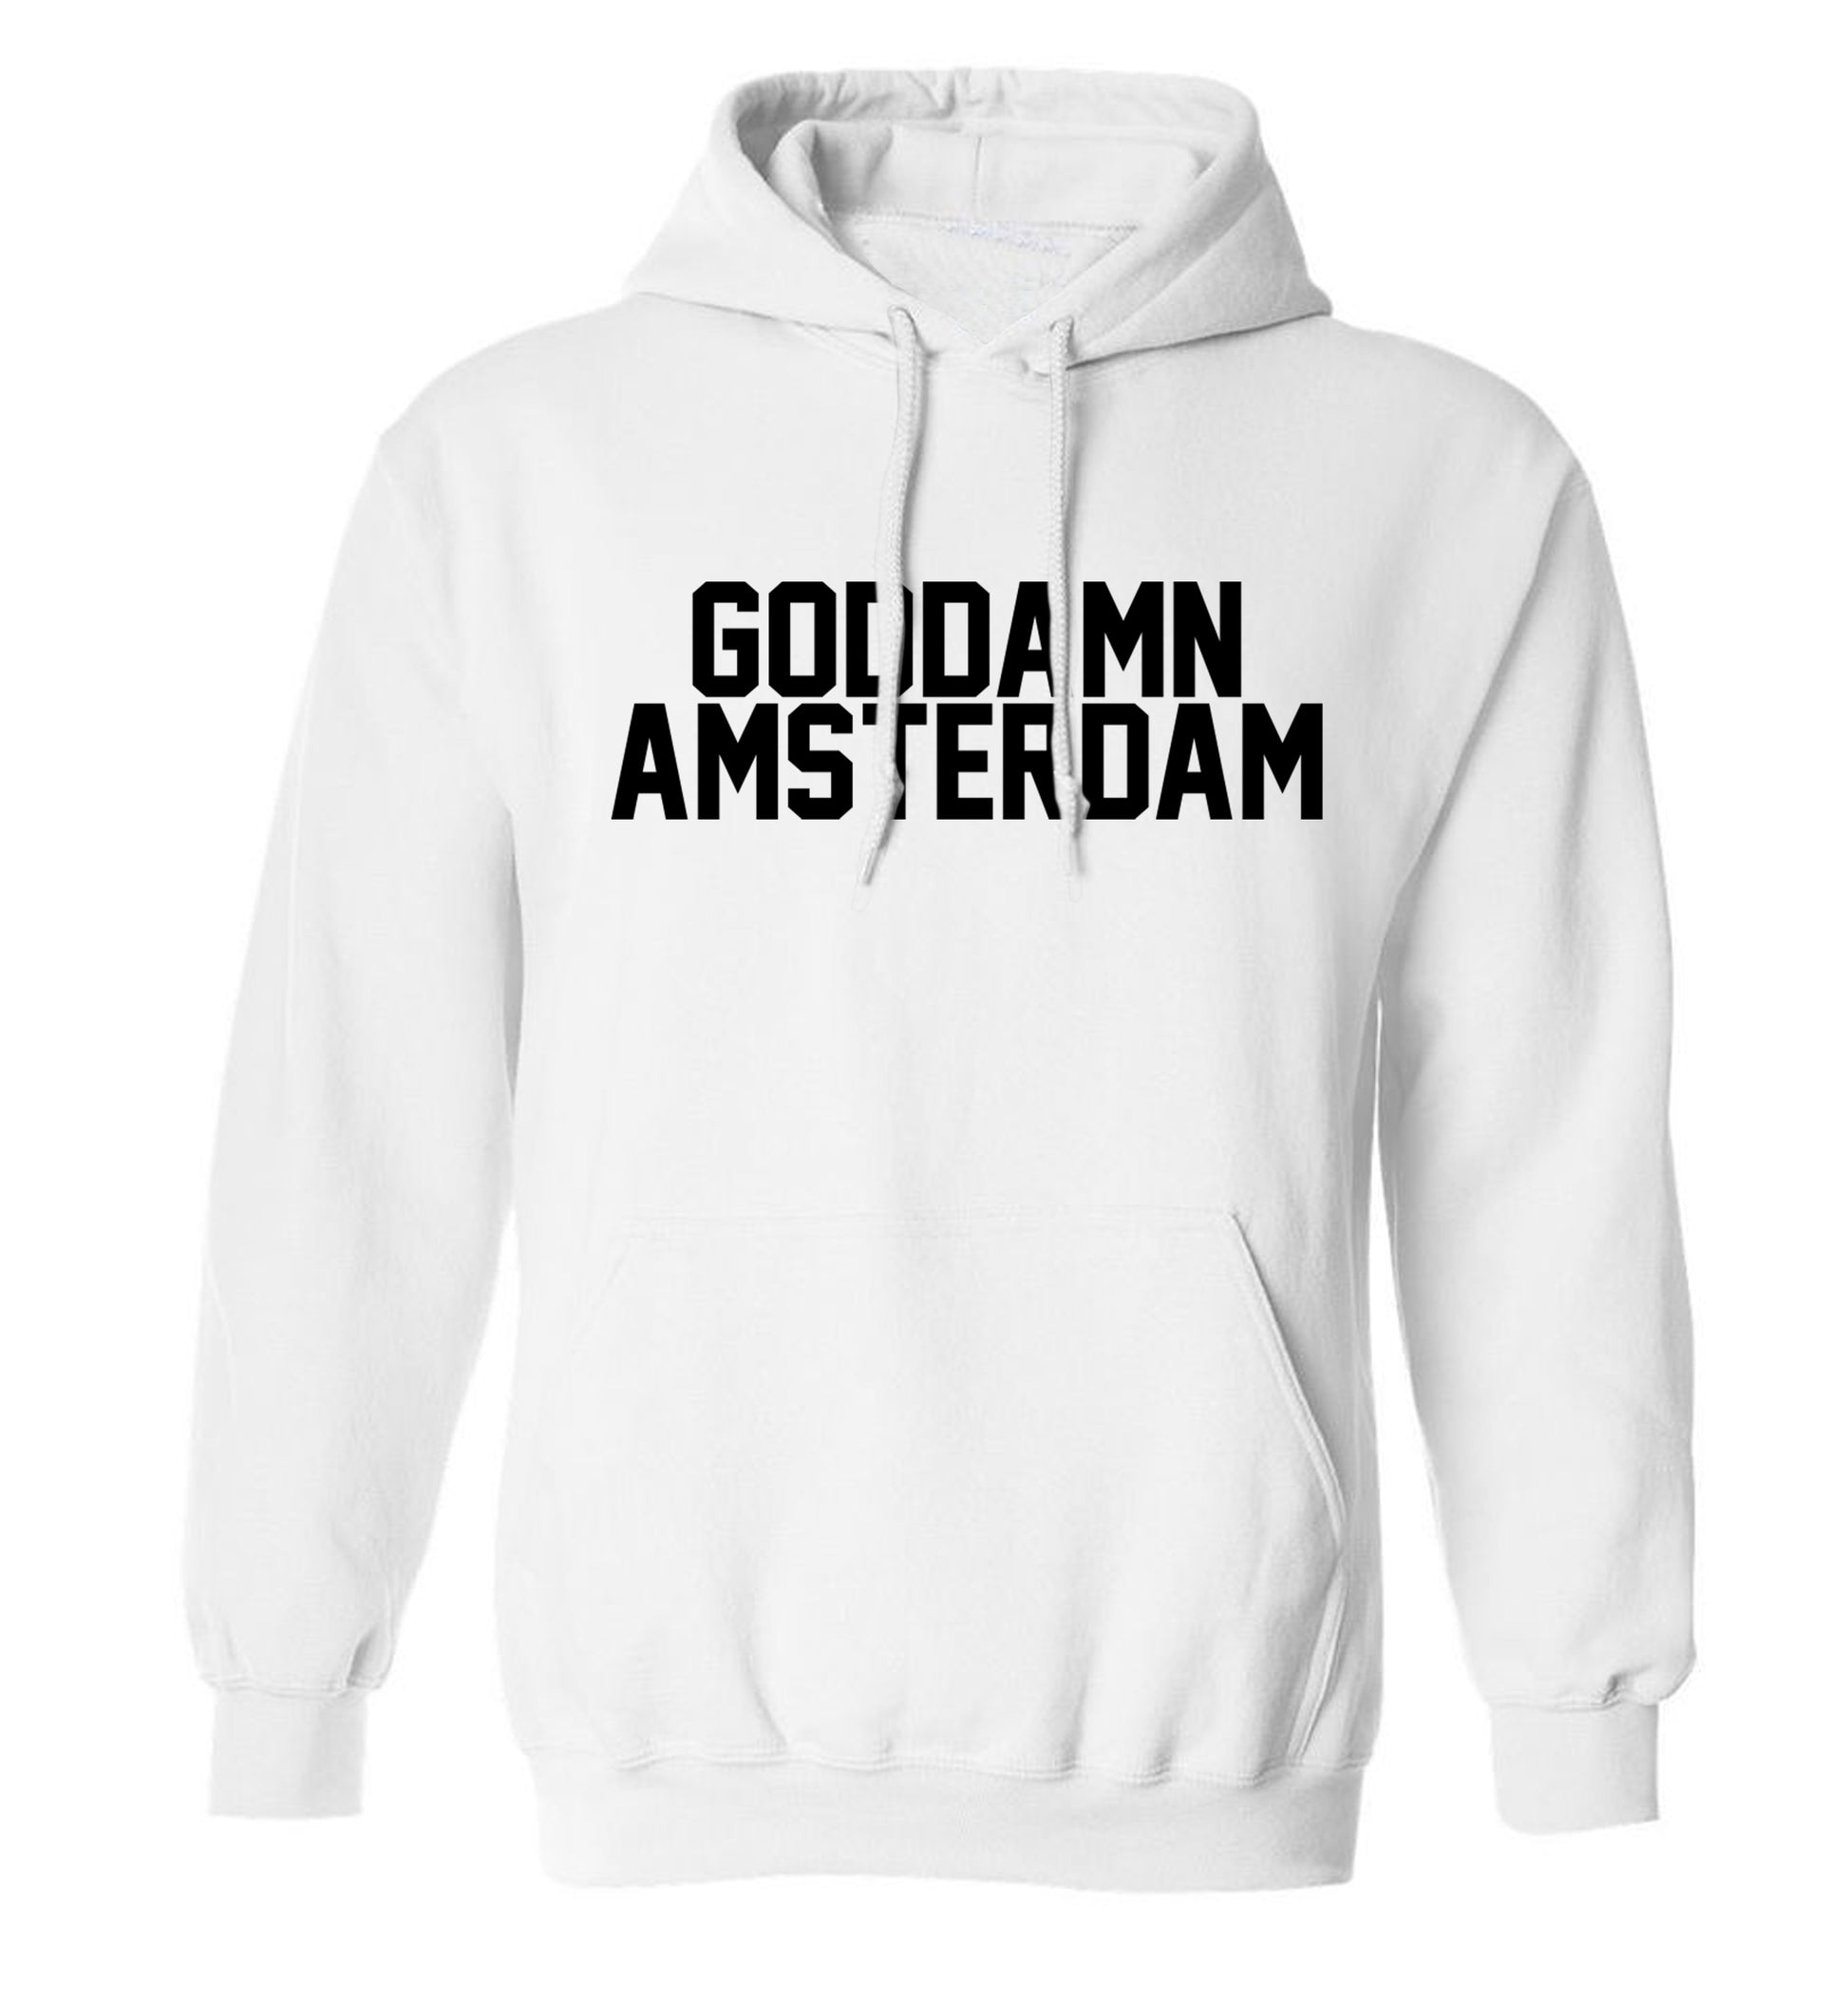 Goddamn Amsterdam adults unisex white hoodie 2XL